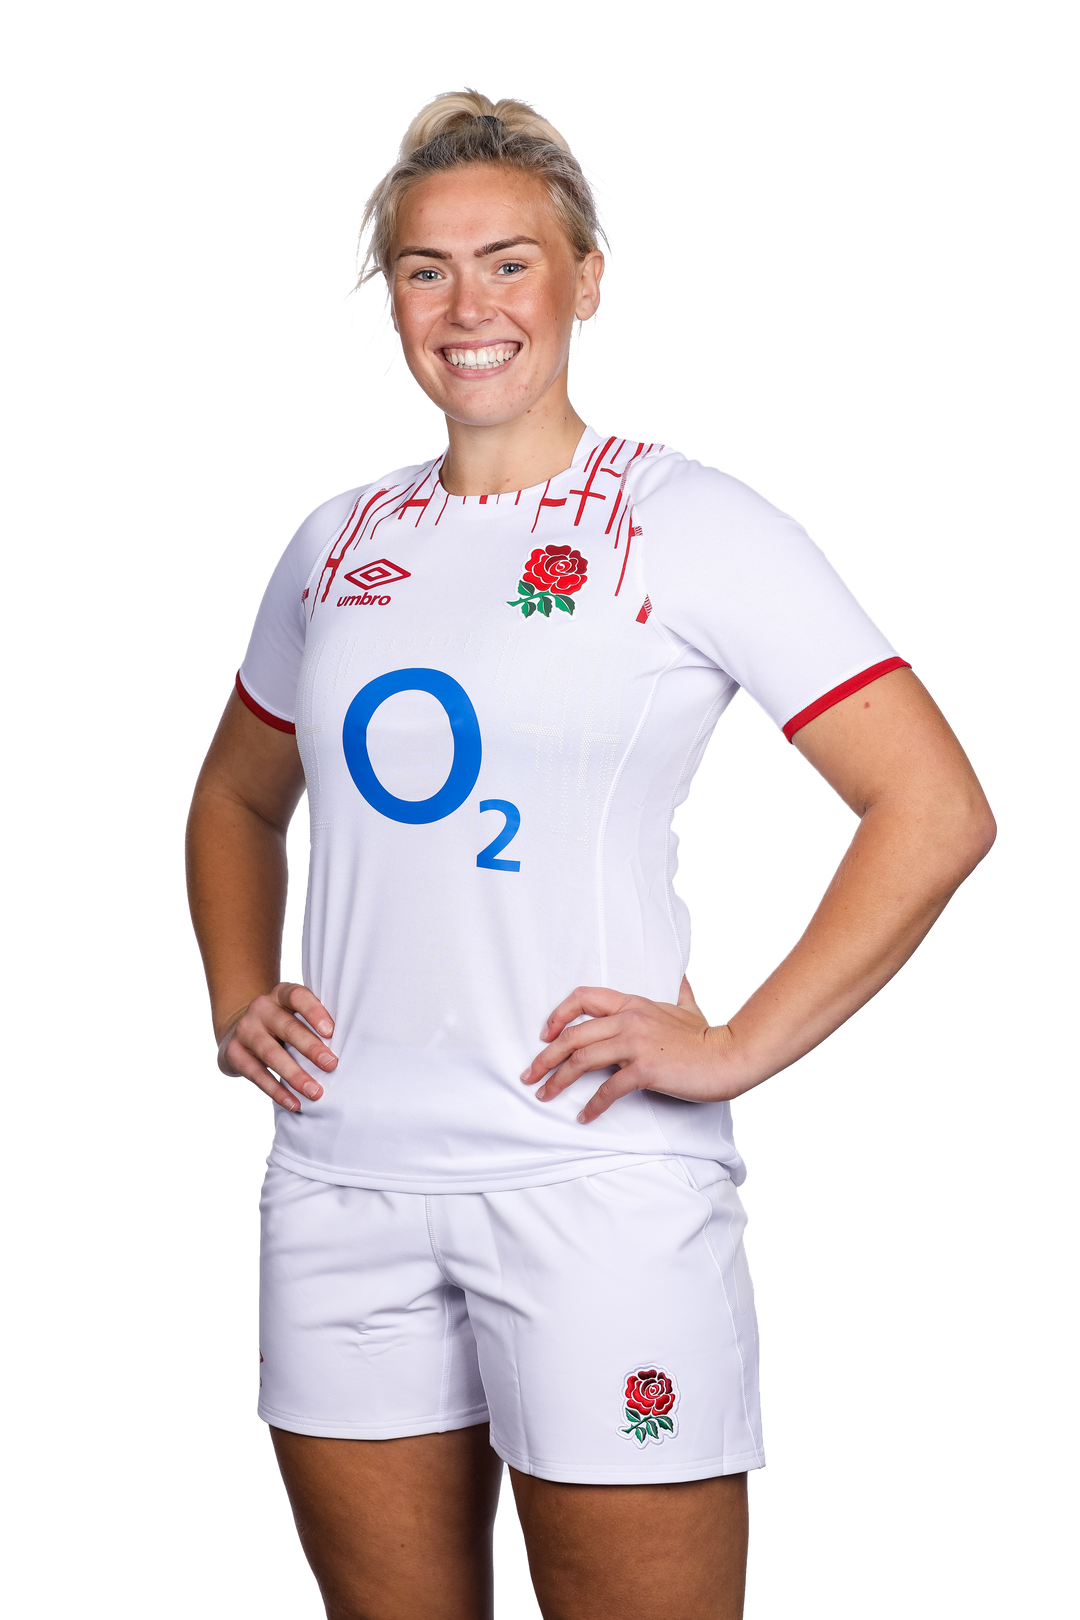 Meet Rosie Galligan, England rugby player and Meningitis Now ambassador